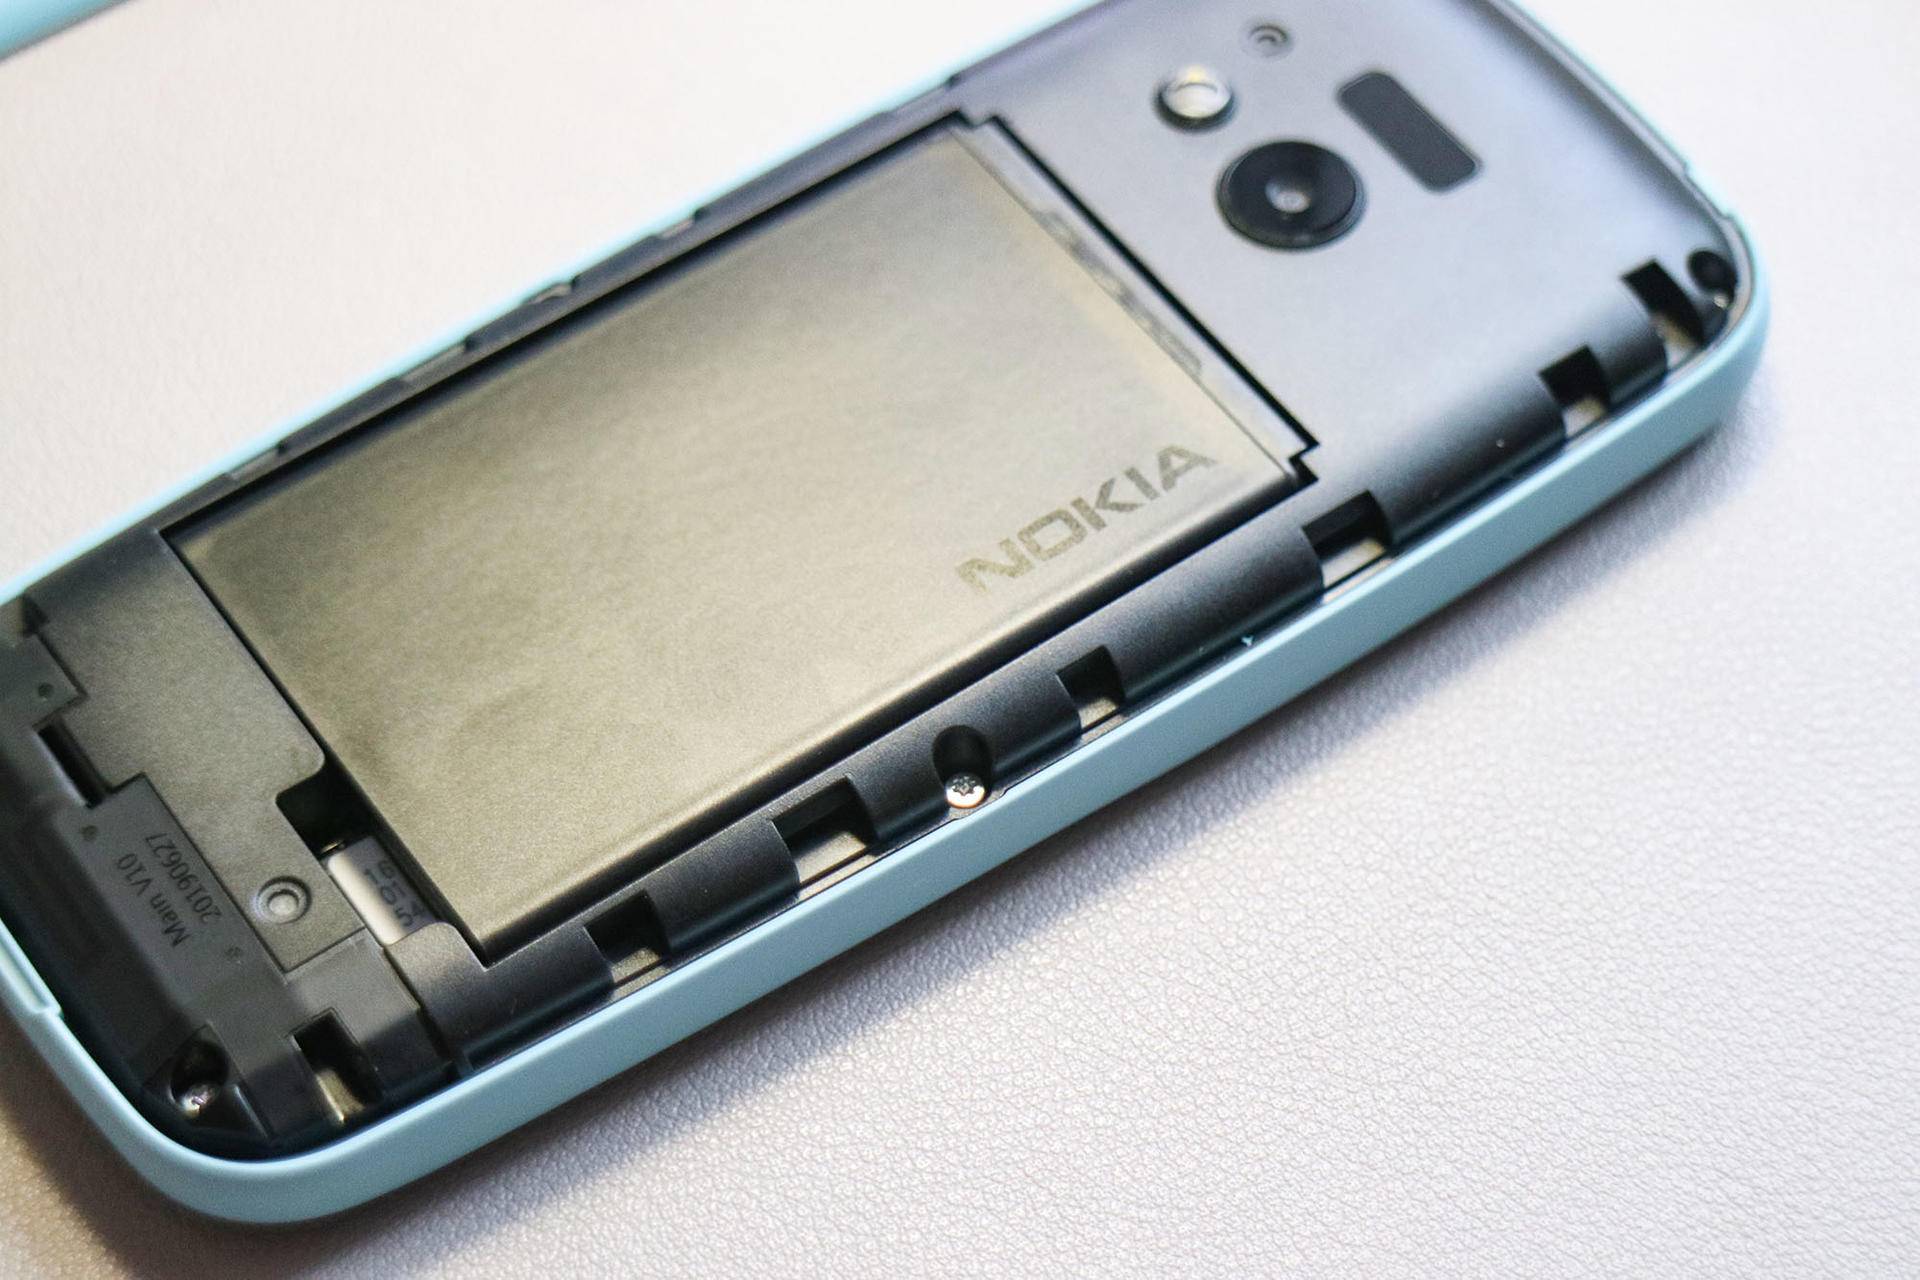 Nokia 220，经典4G功能备用机